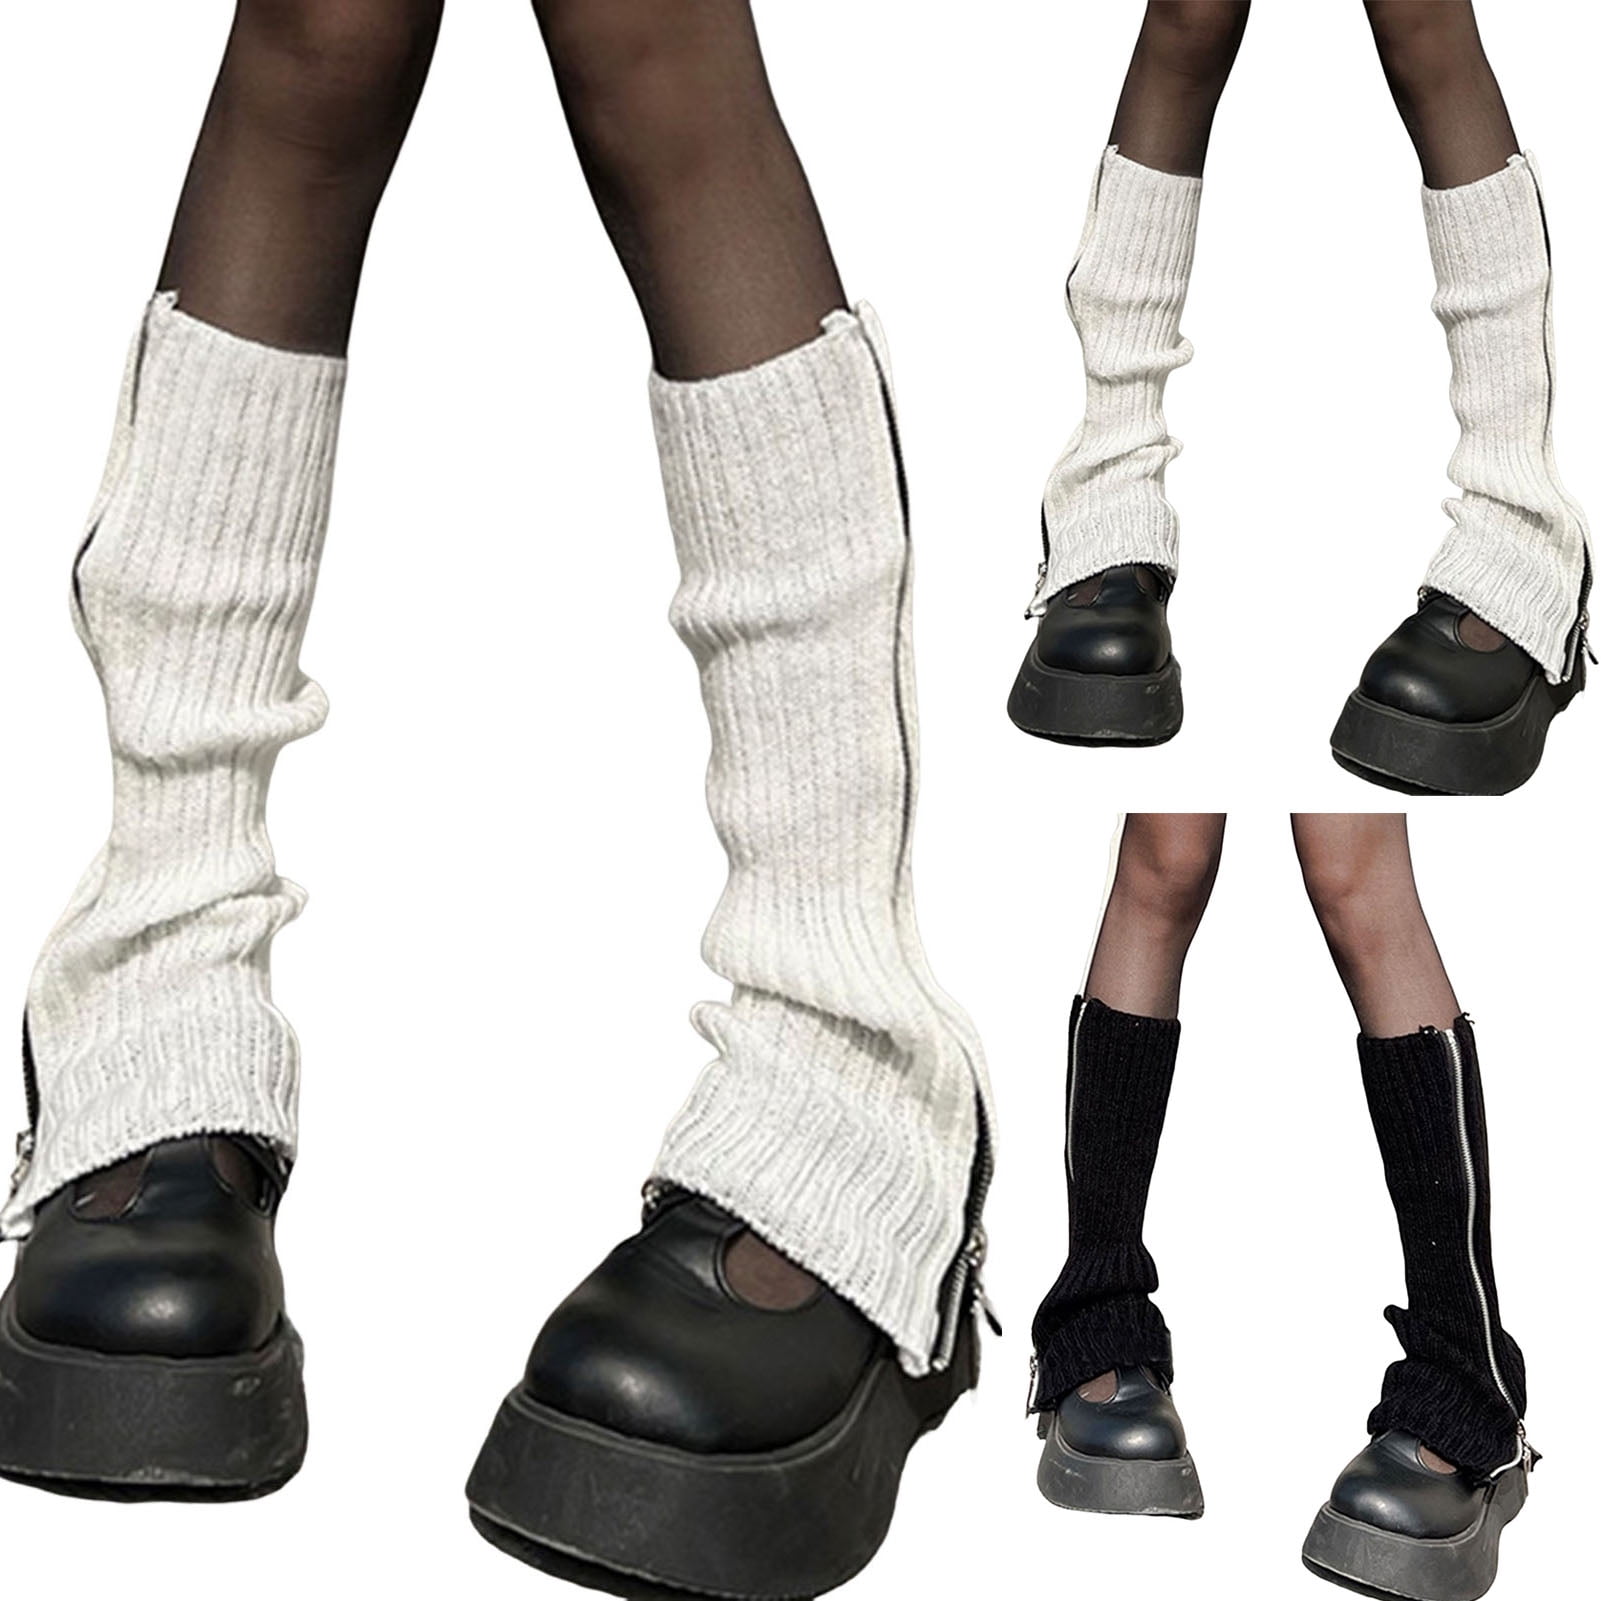 harmtty 1 Pair Leg Socks Adorable Skin-friendly Multi-colored